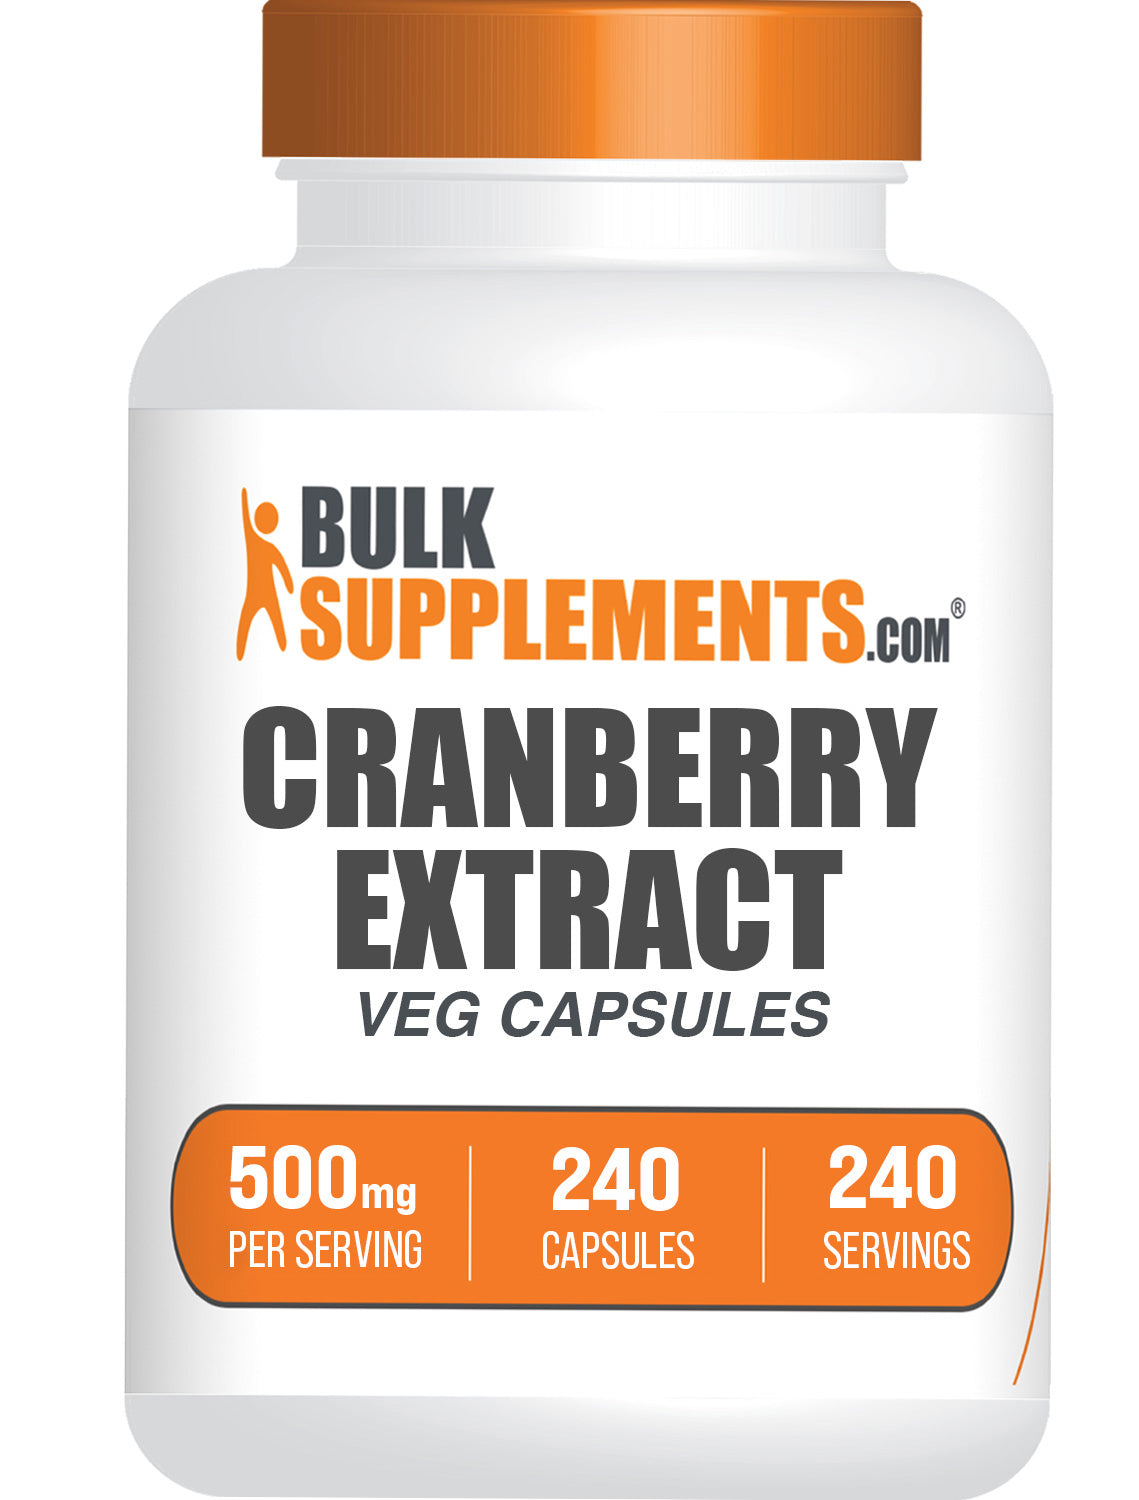 BulkSupplements.com Cranberry Extract 240 Veg Capsules bottle